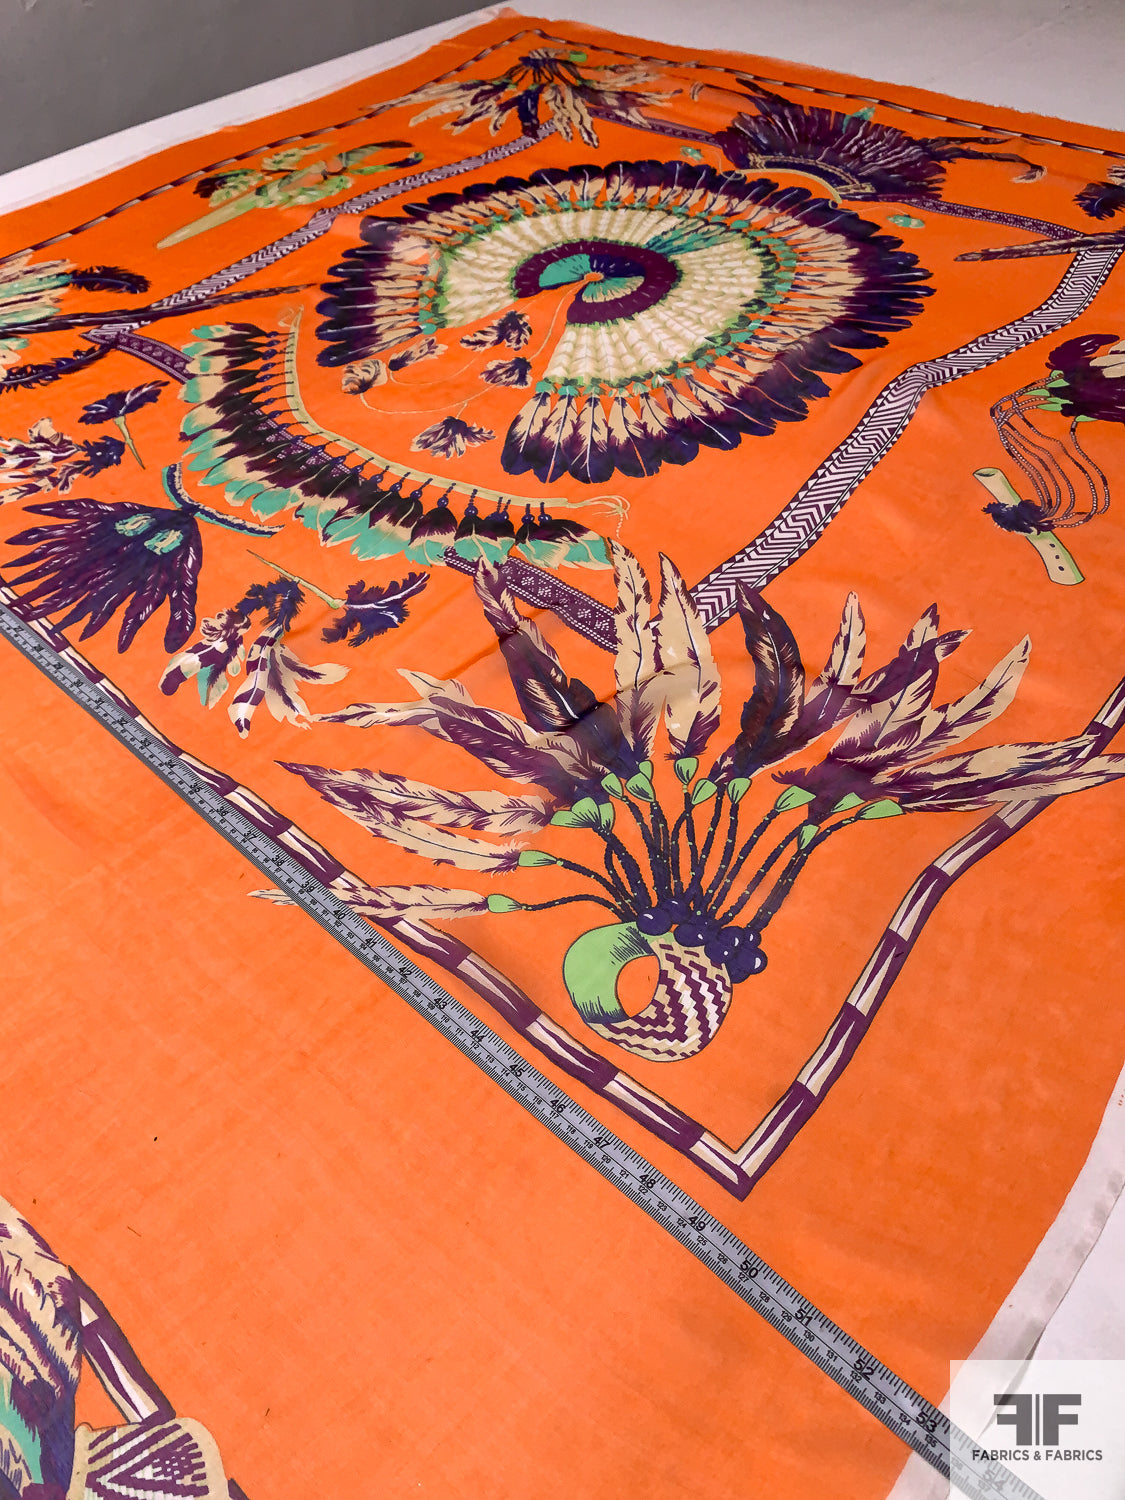 Hermes-Look Feather War Bonnet Printed Silk Chiffon Panel - Orange / Purple / Turquoise